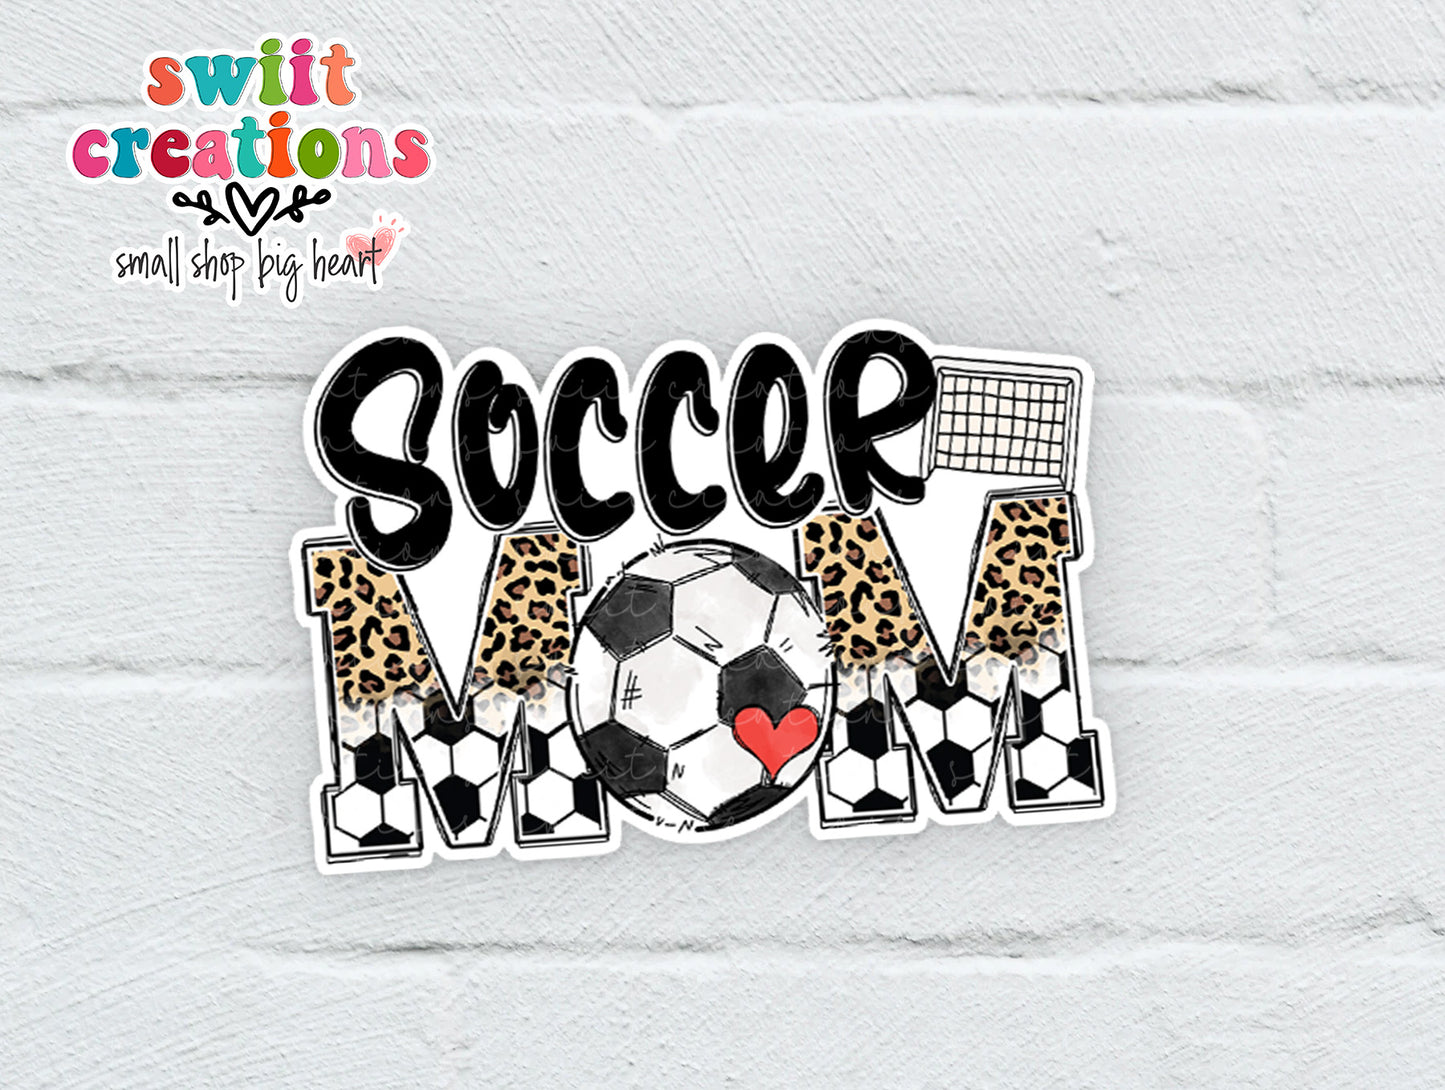 Soccer Mom Sticker (SS762)